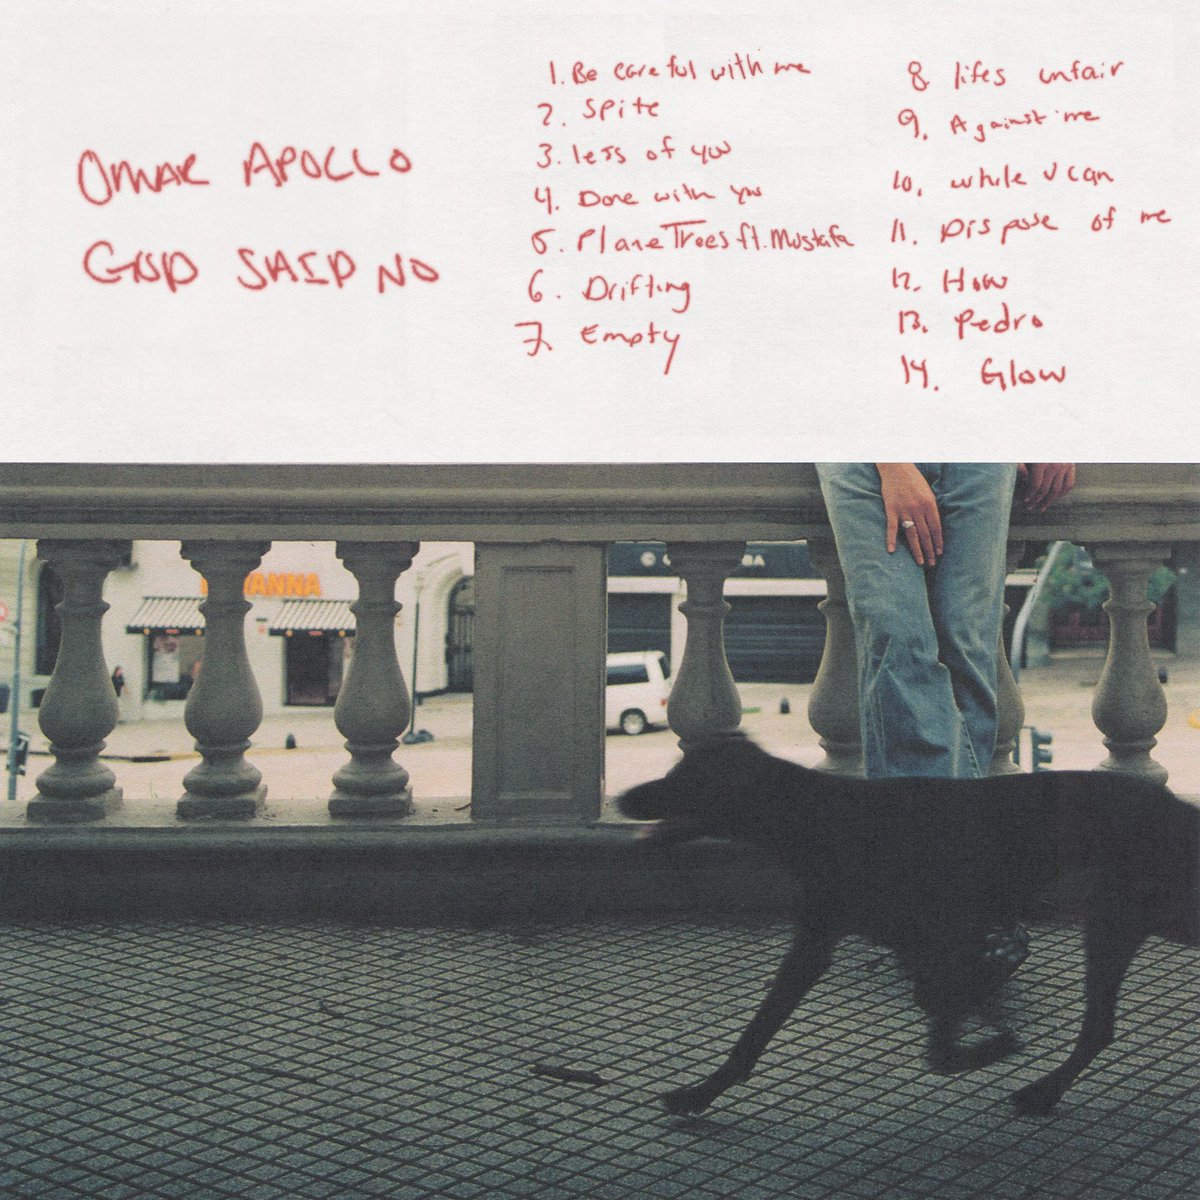 Omar Apollo announces new album, ‘God Said No’. Out June 28.